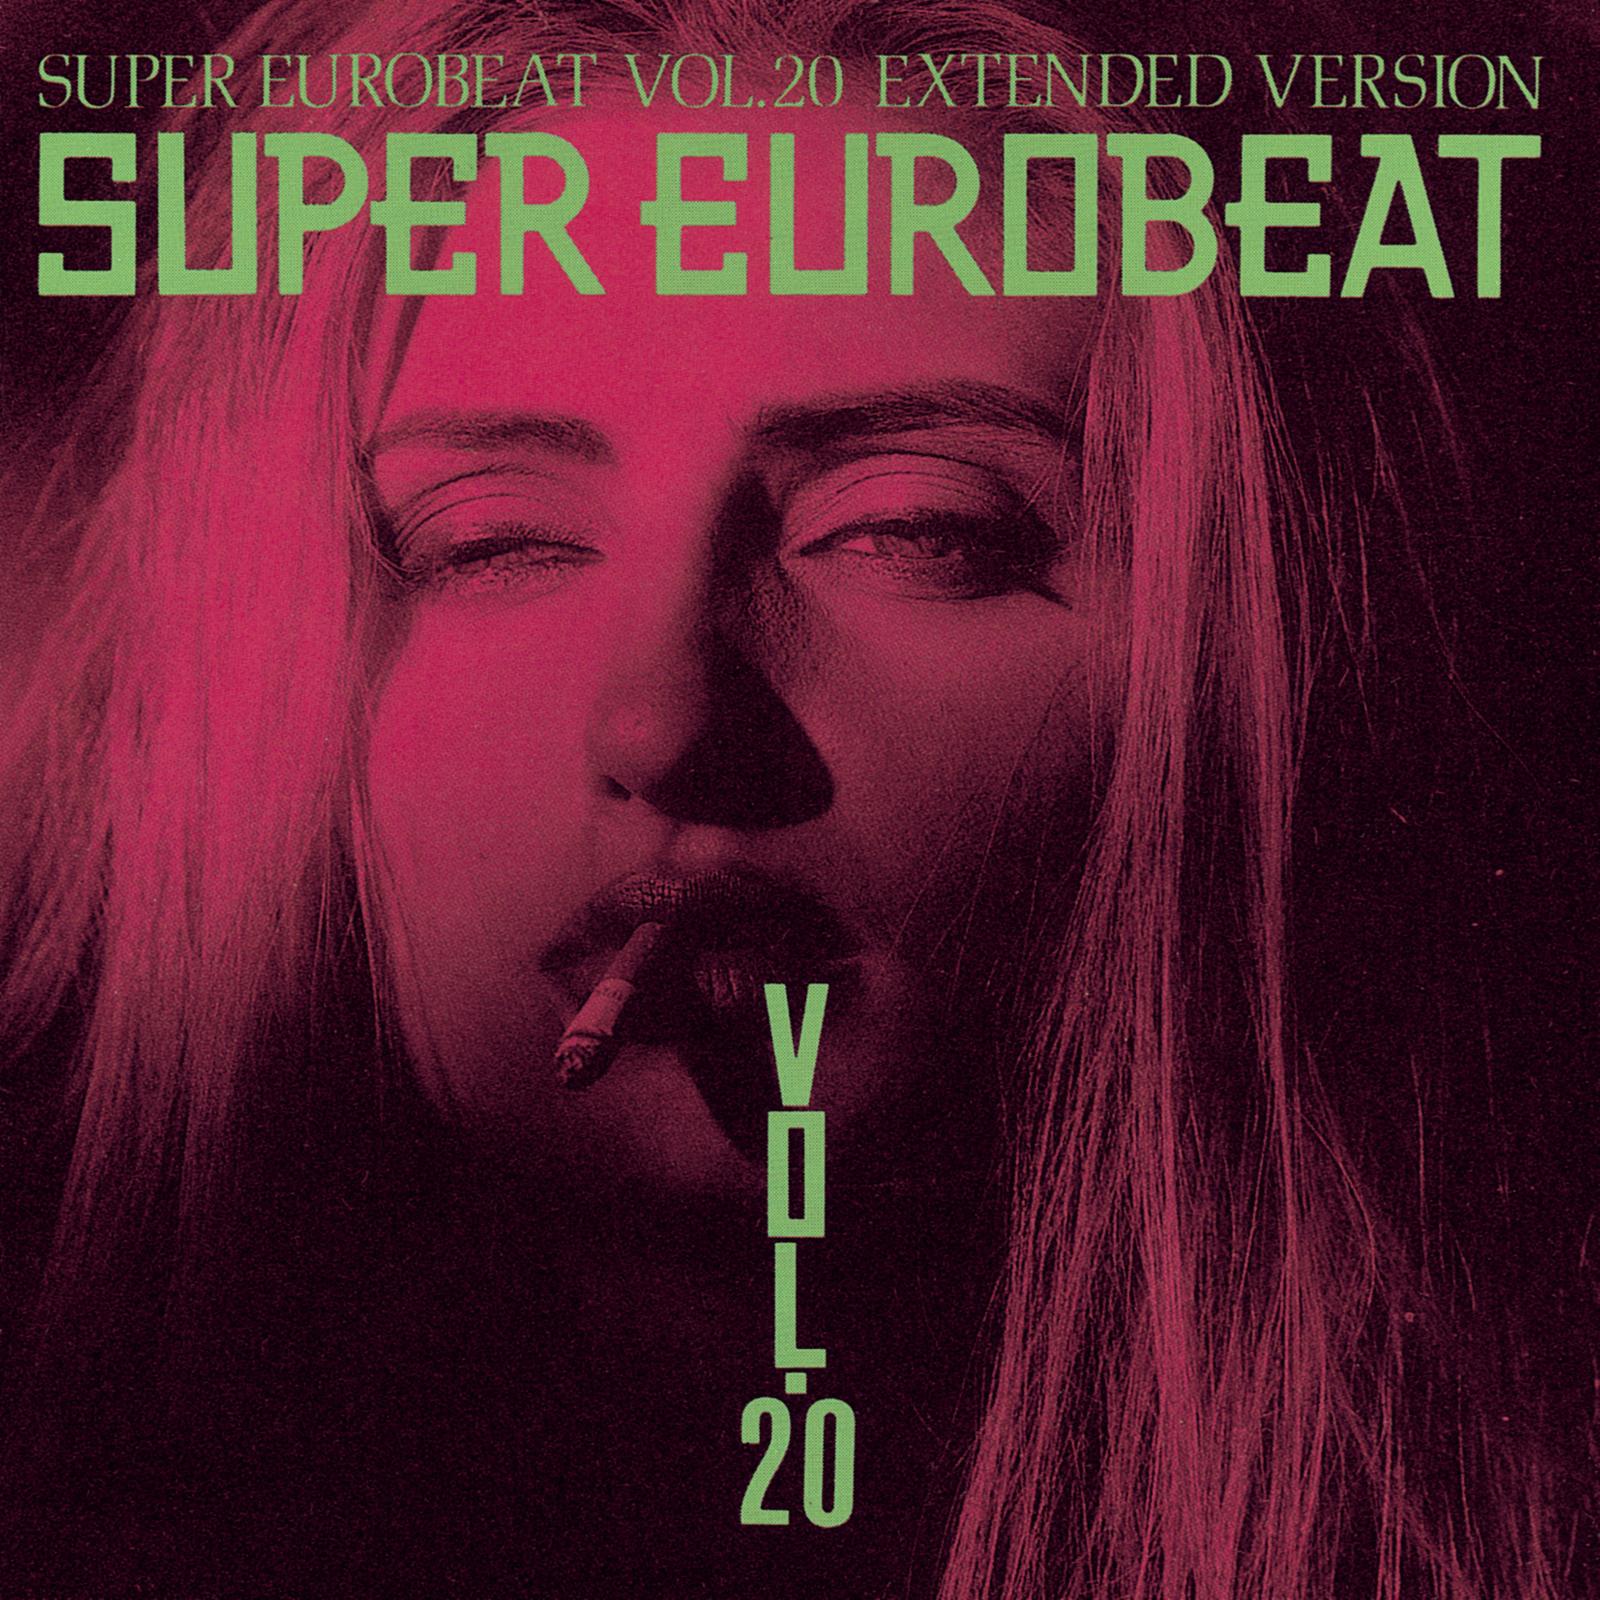 SUPER EUROBEAT VOL.20 EXTENDED VIRSION专辑